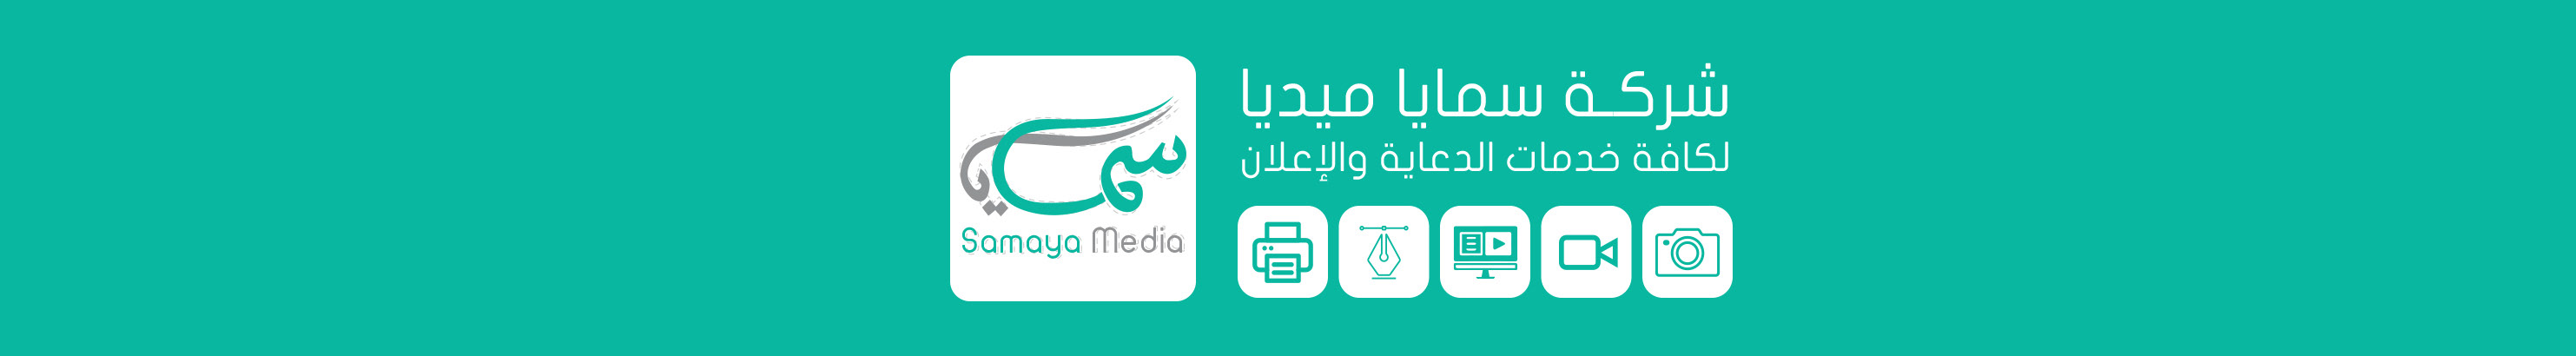 Banner de perfil de samaya media